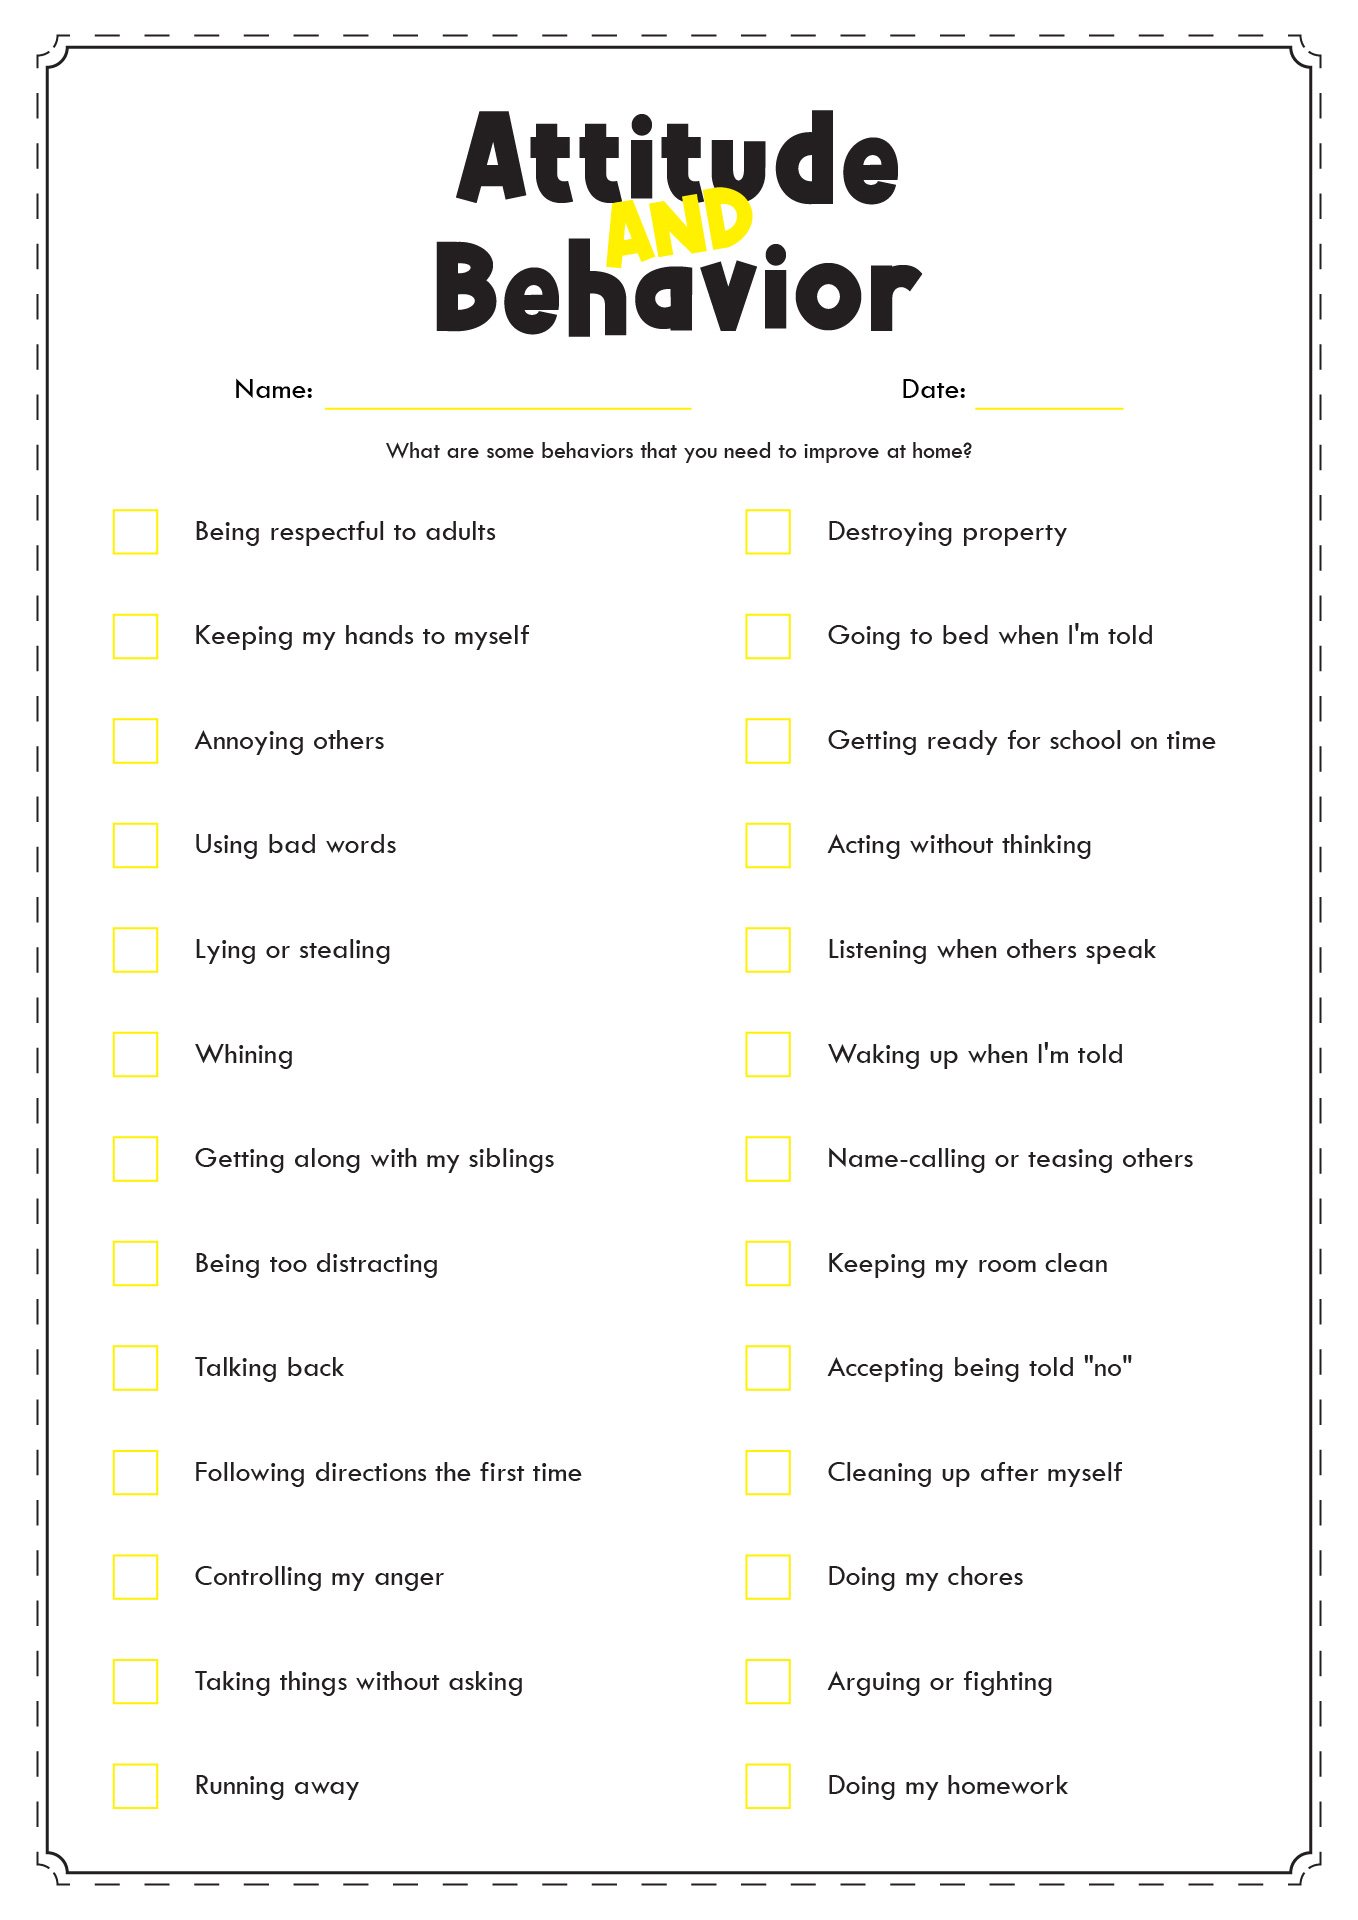 Attitude and Behavior Worksheet